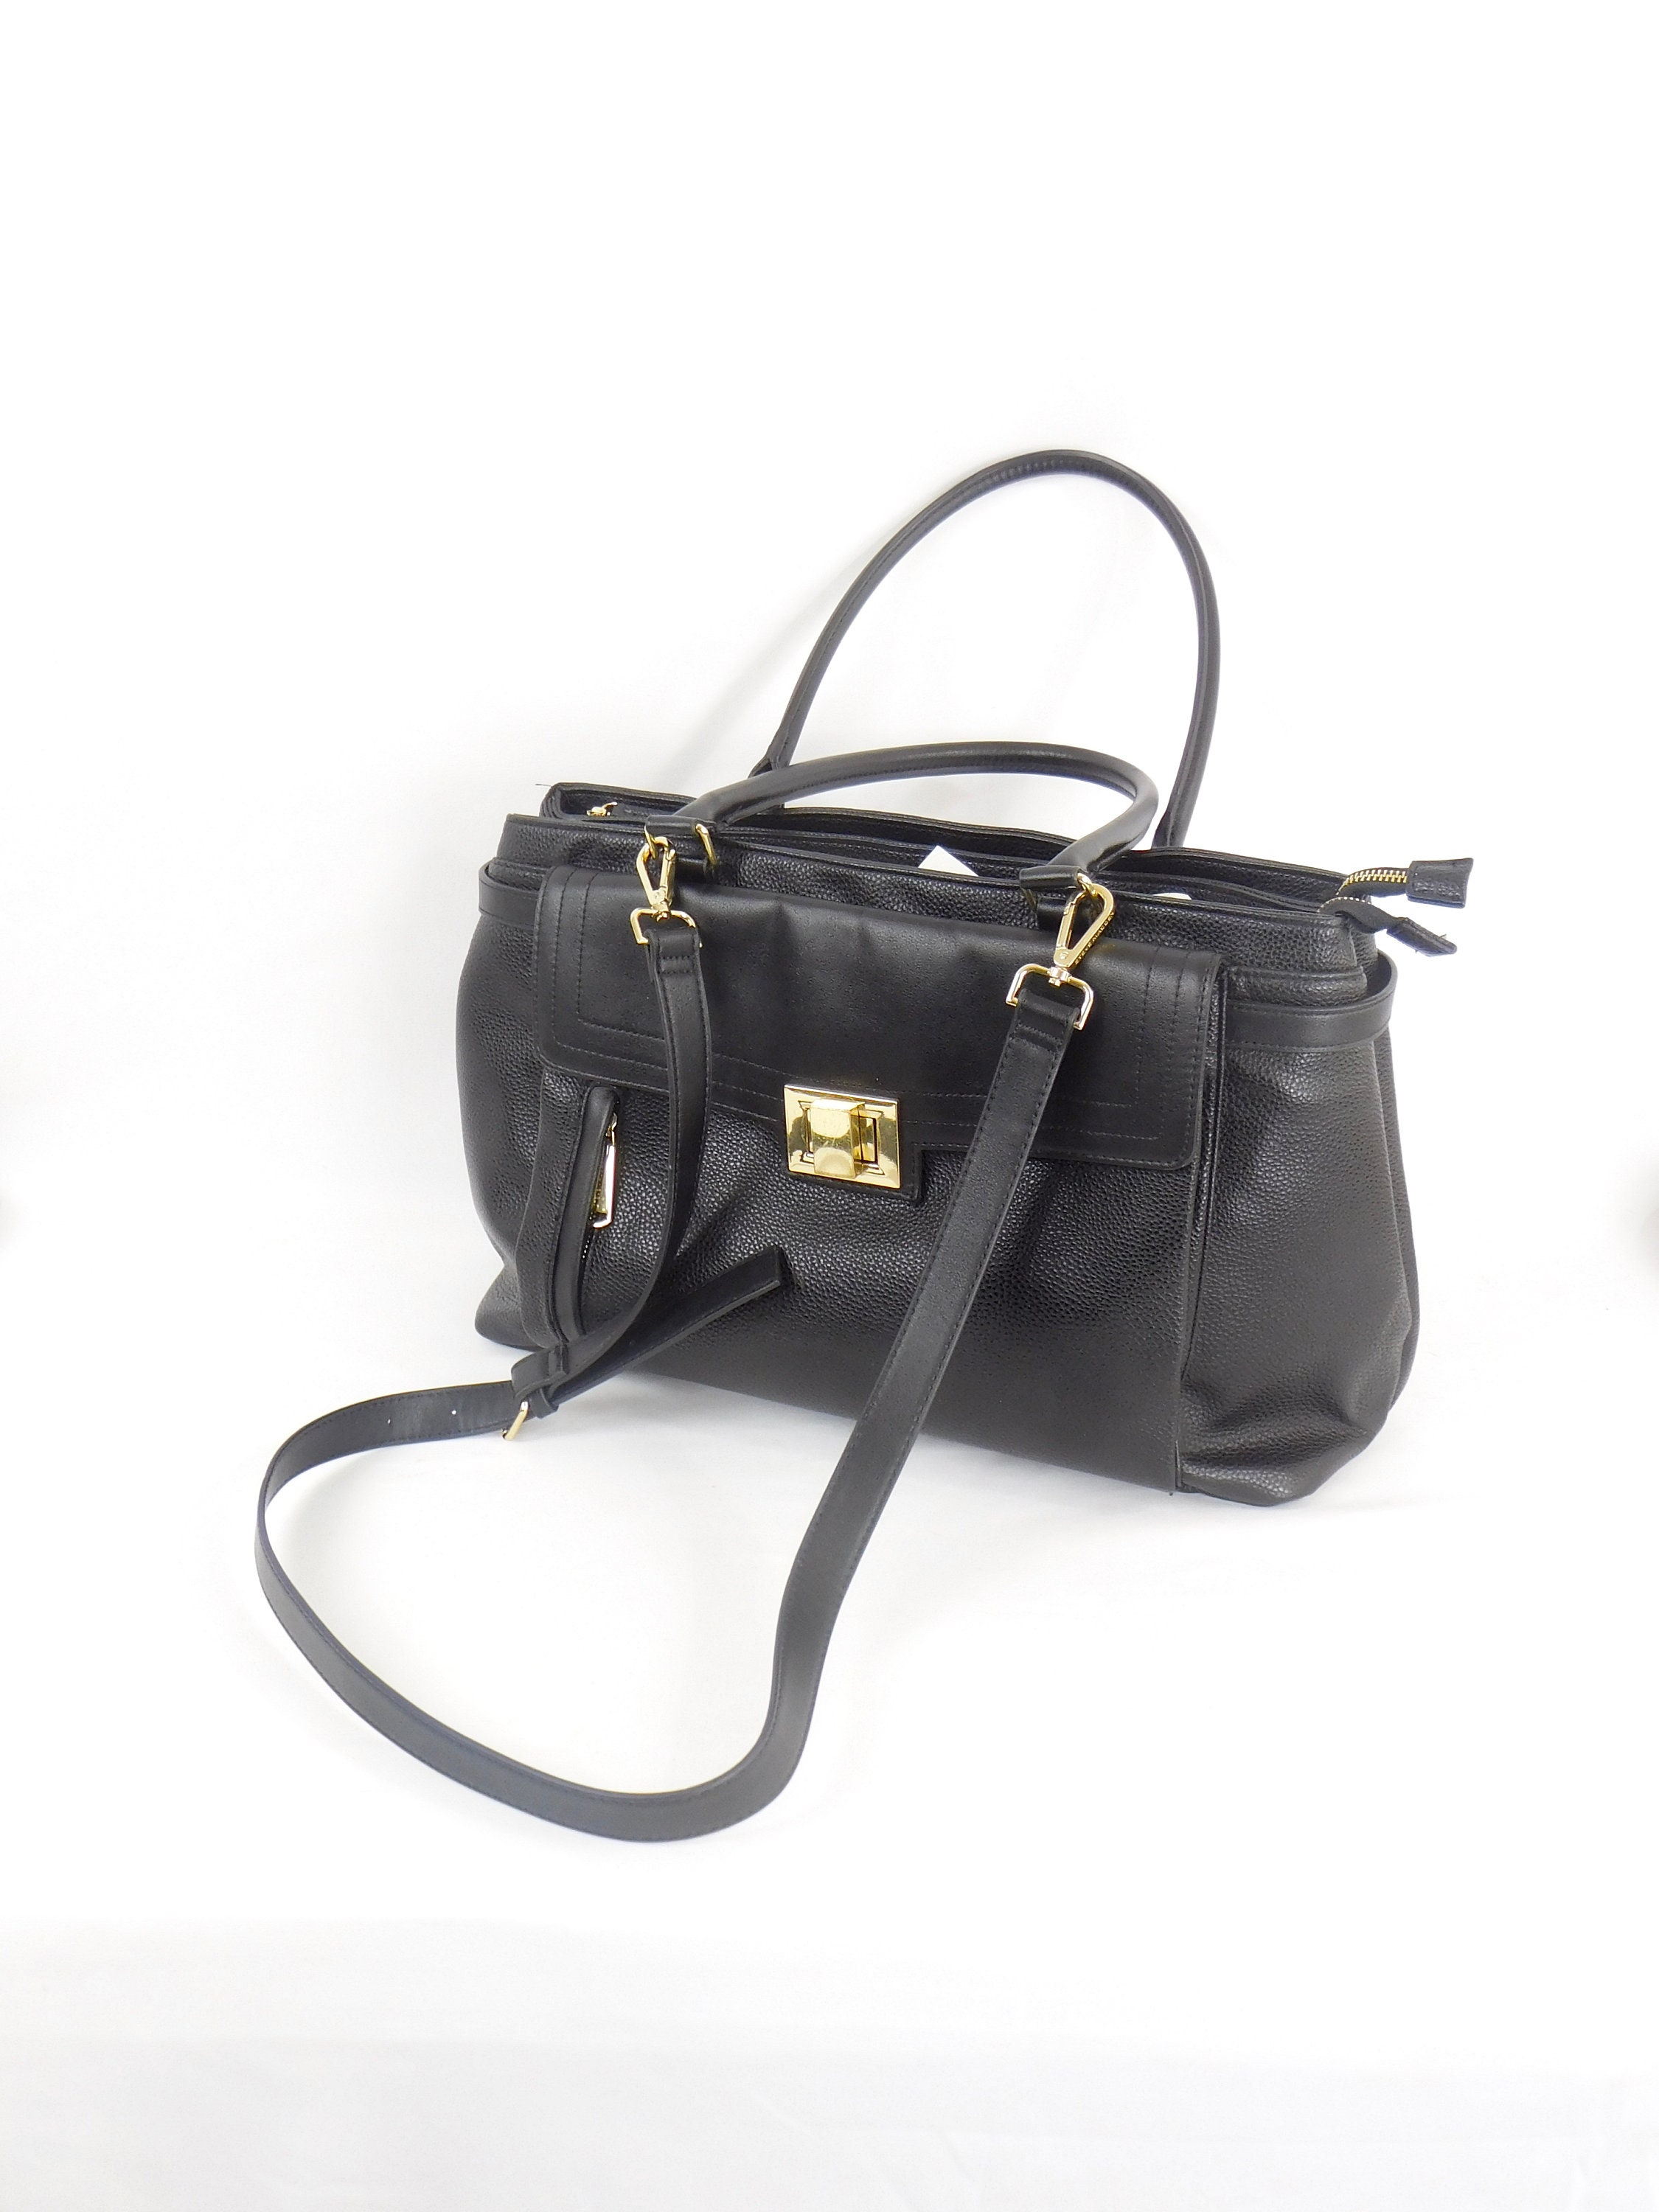 Buy RIJAC Premium Vegan Leather Handheld Bags: Convertible Office Bags For  Women To Shoulder Sling - Stylish & Practical Women Handbags at Amazon.in